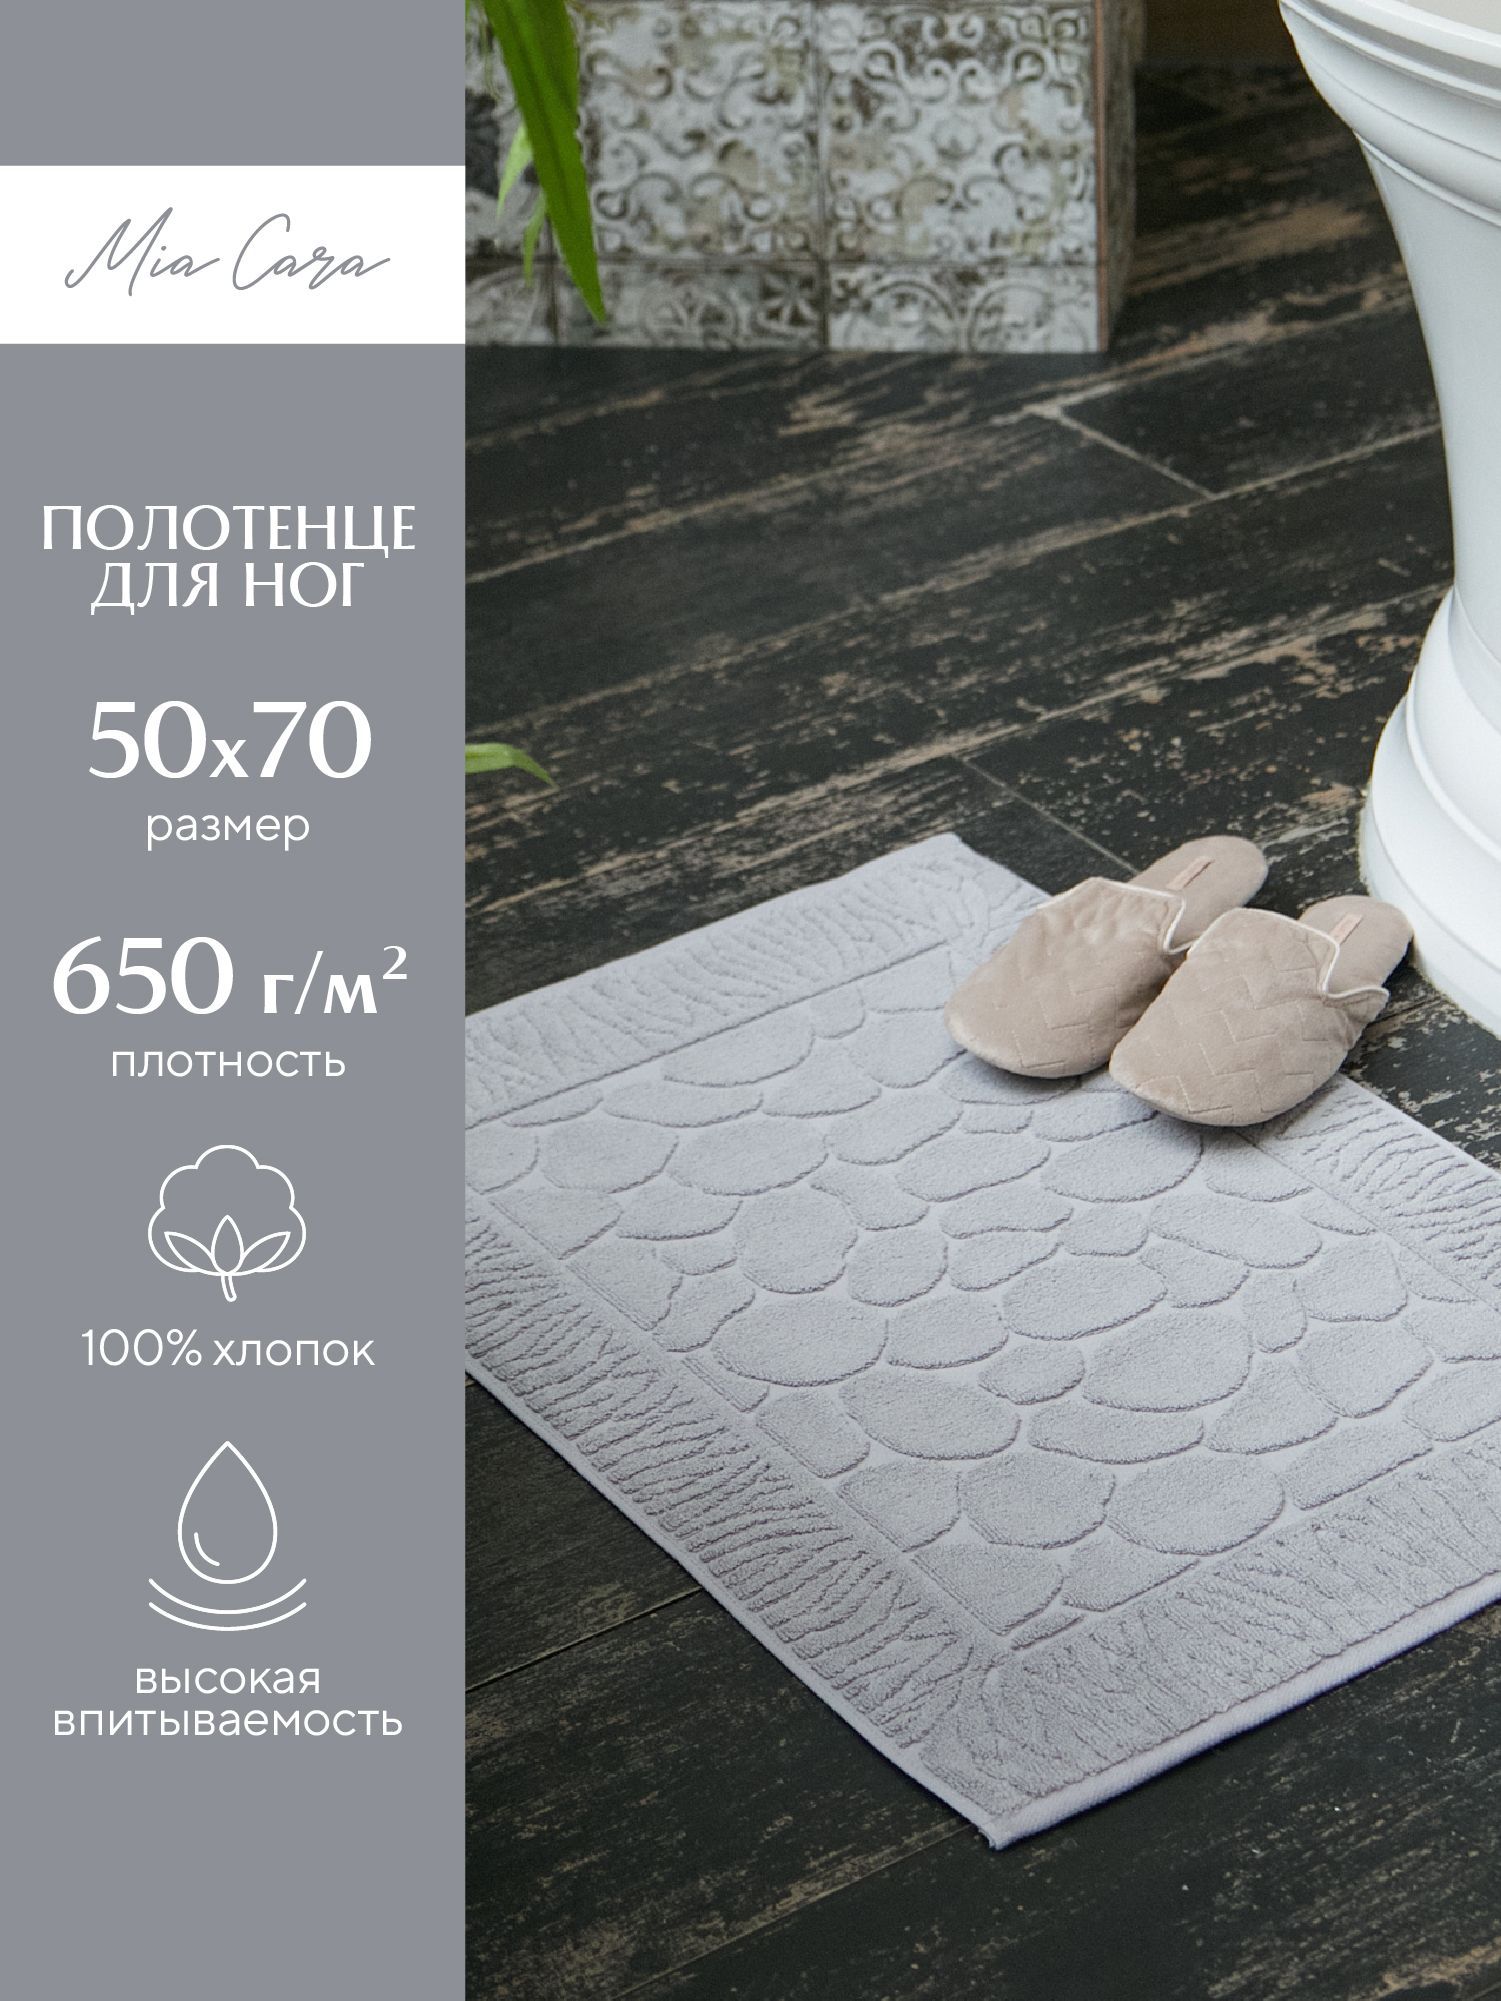 Полотенце-коврик махровое для ног 50х70 (коврик) Mia Cara светло-серый